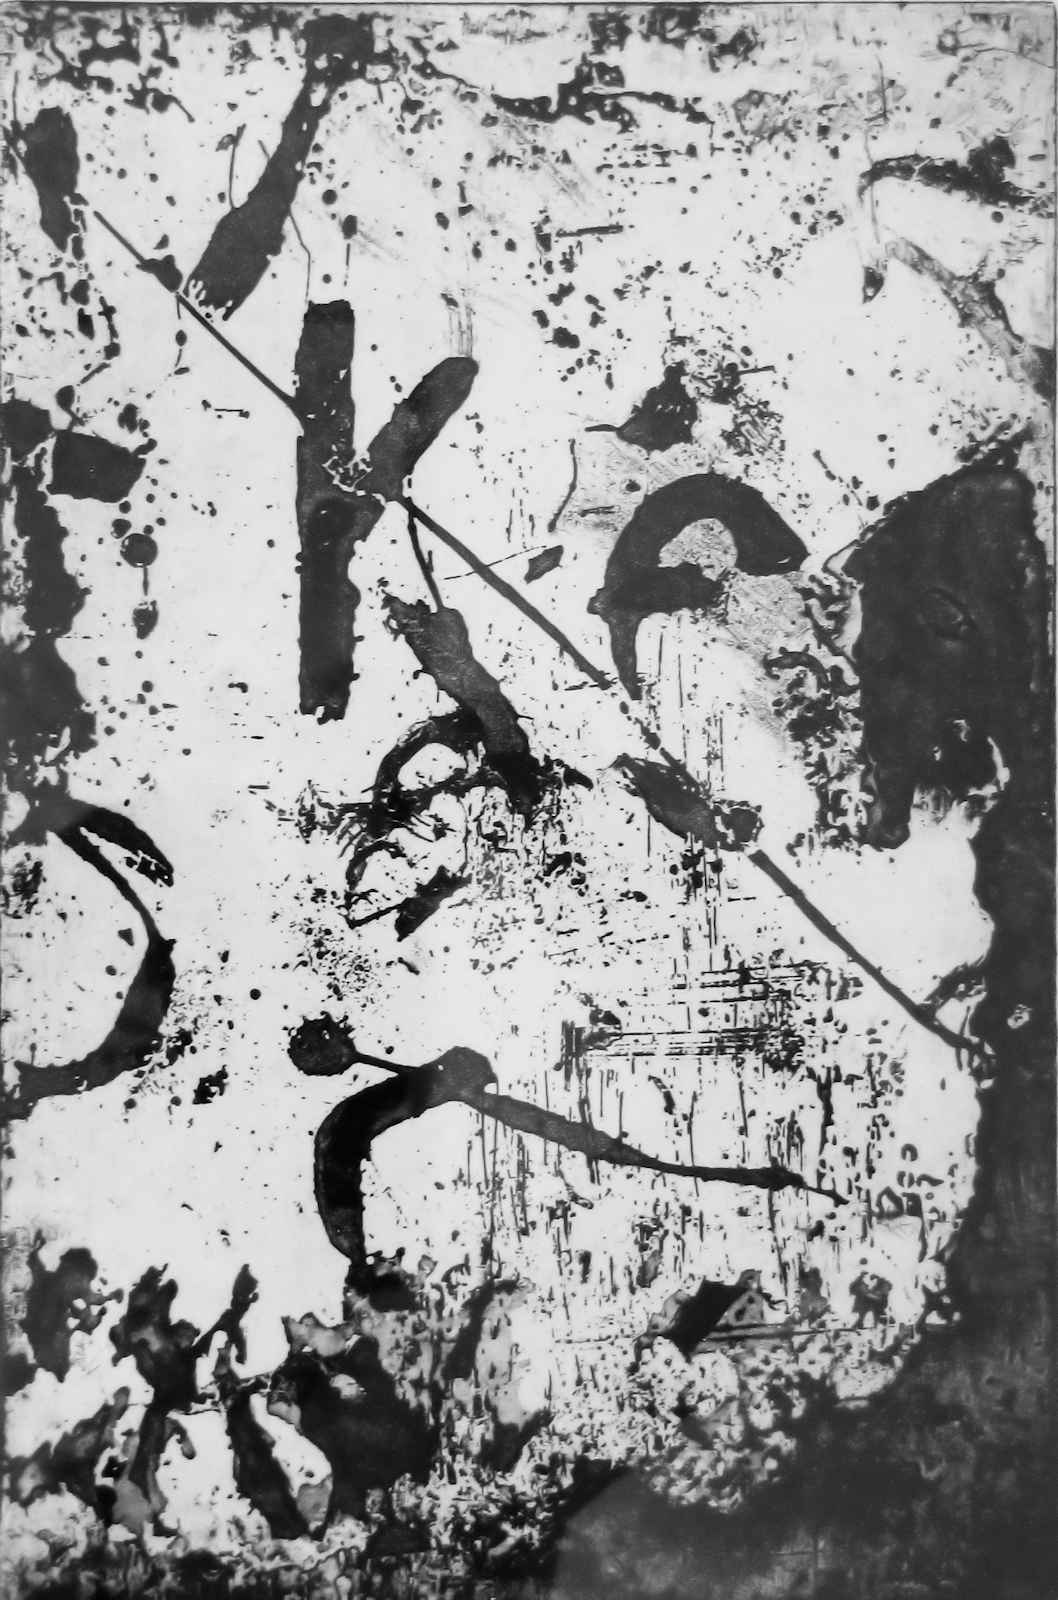 Kerstin 1988   Intaglio (aquatint etching) on paper, edition of 5 26 x 40 cm